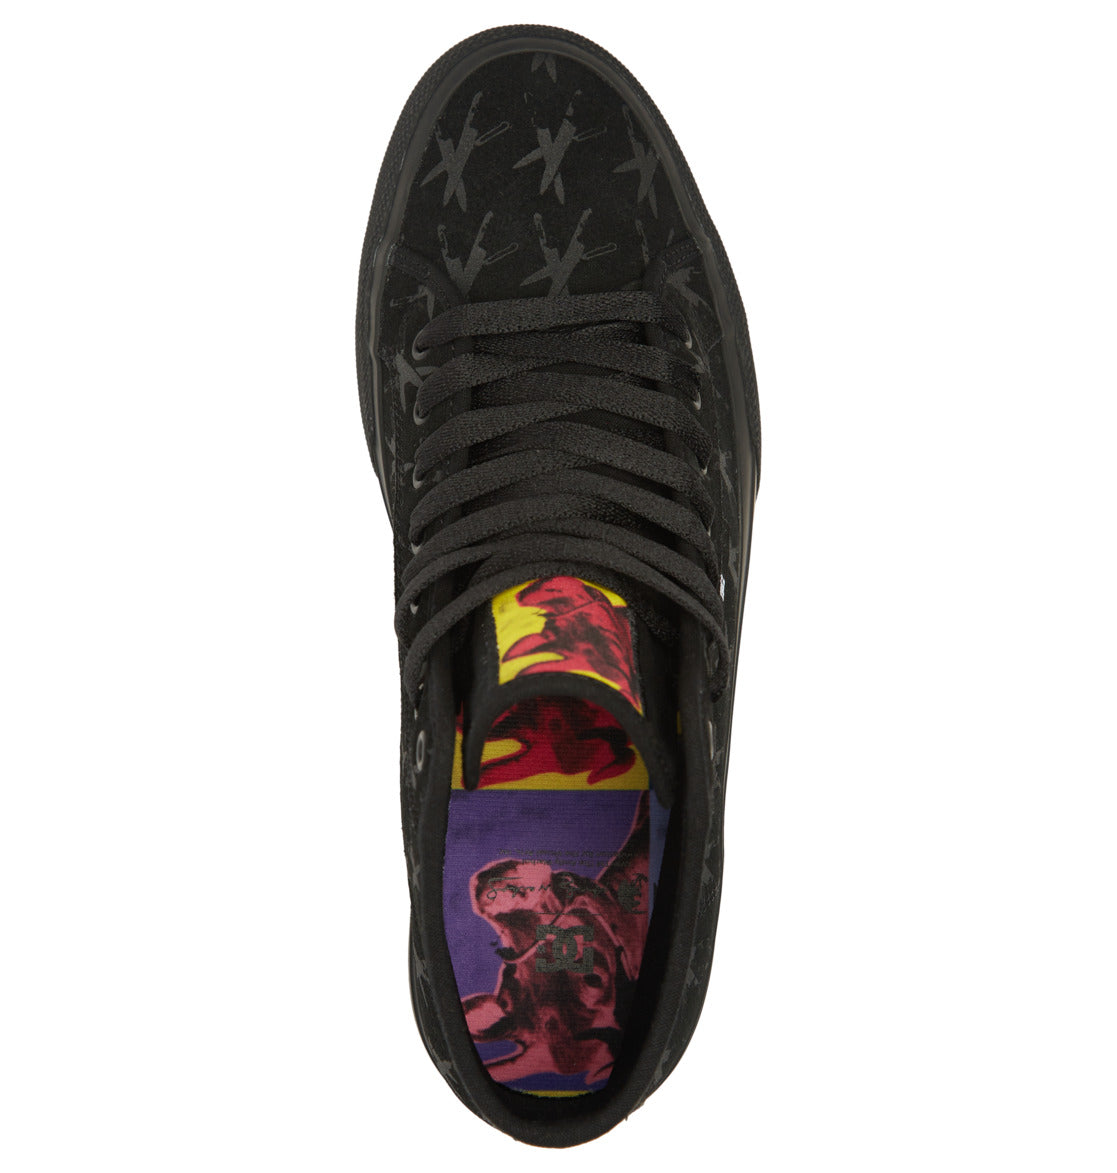 DC X Andy Warhol Manual Hi Shoe Black Top